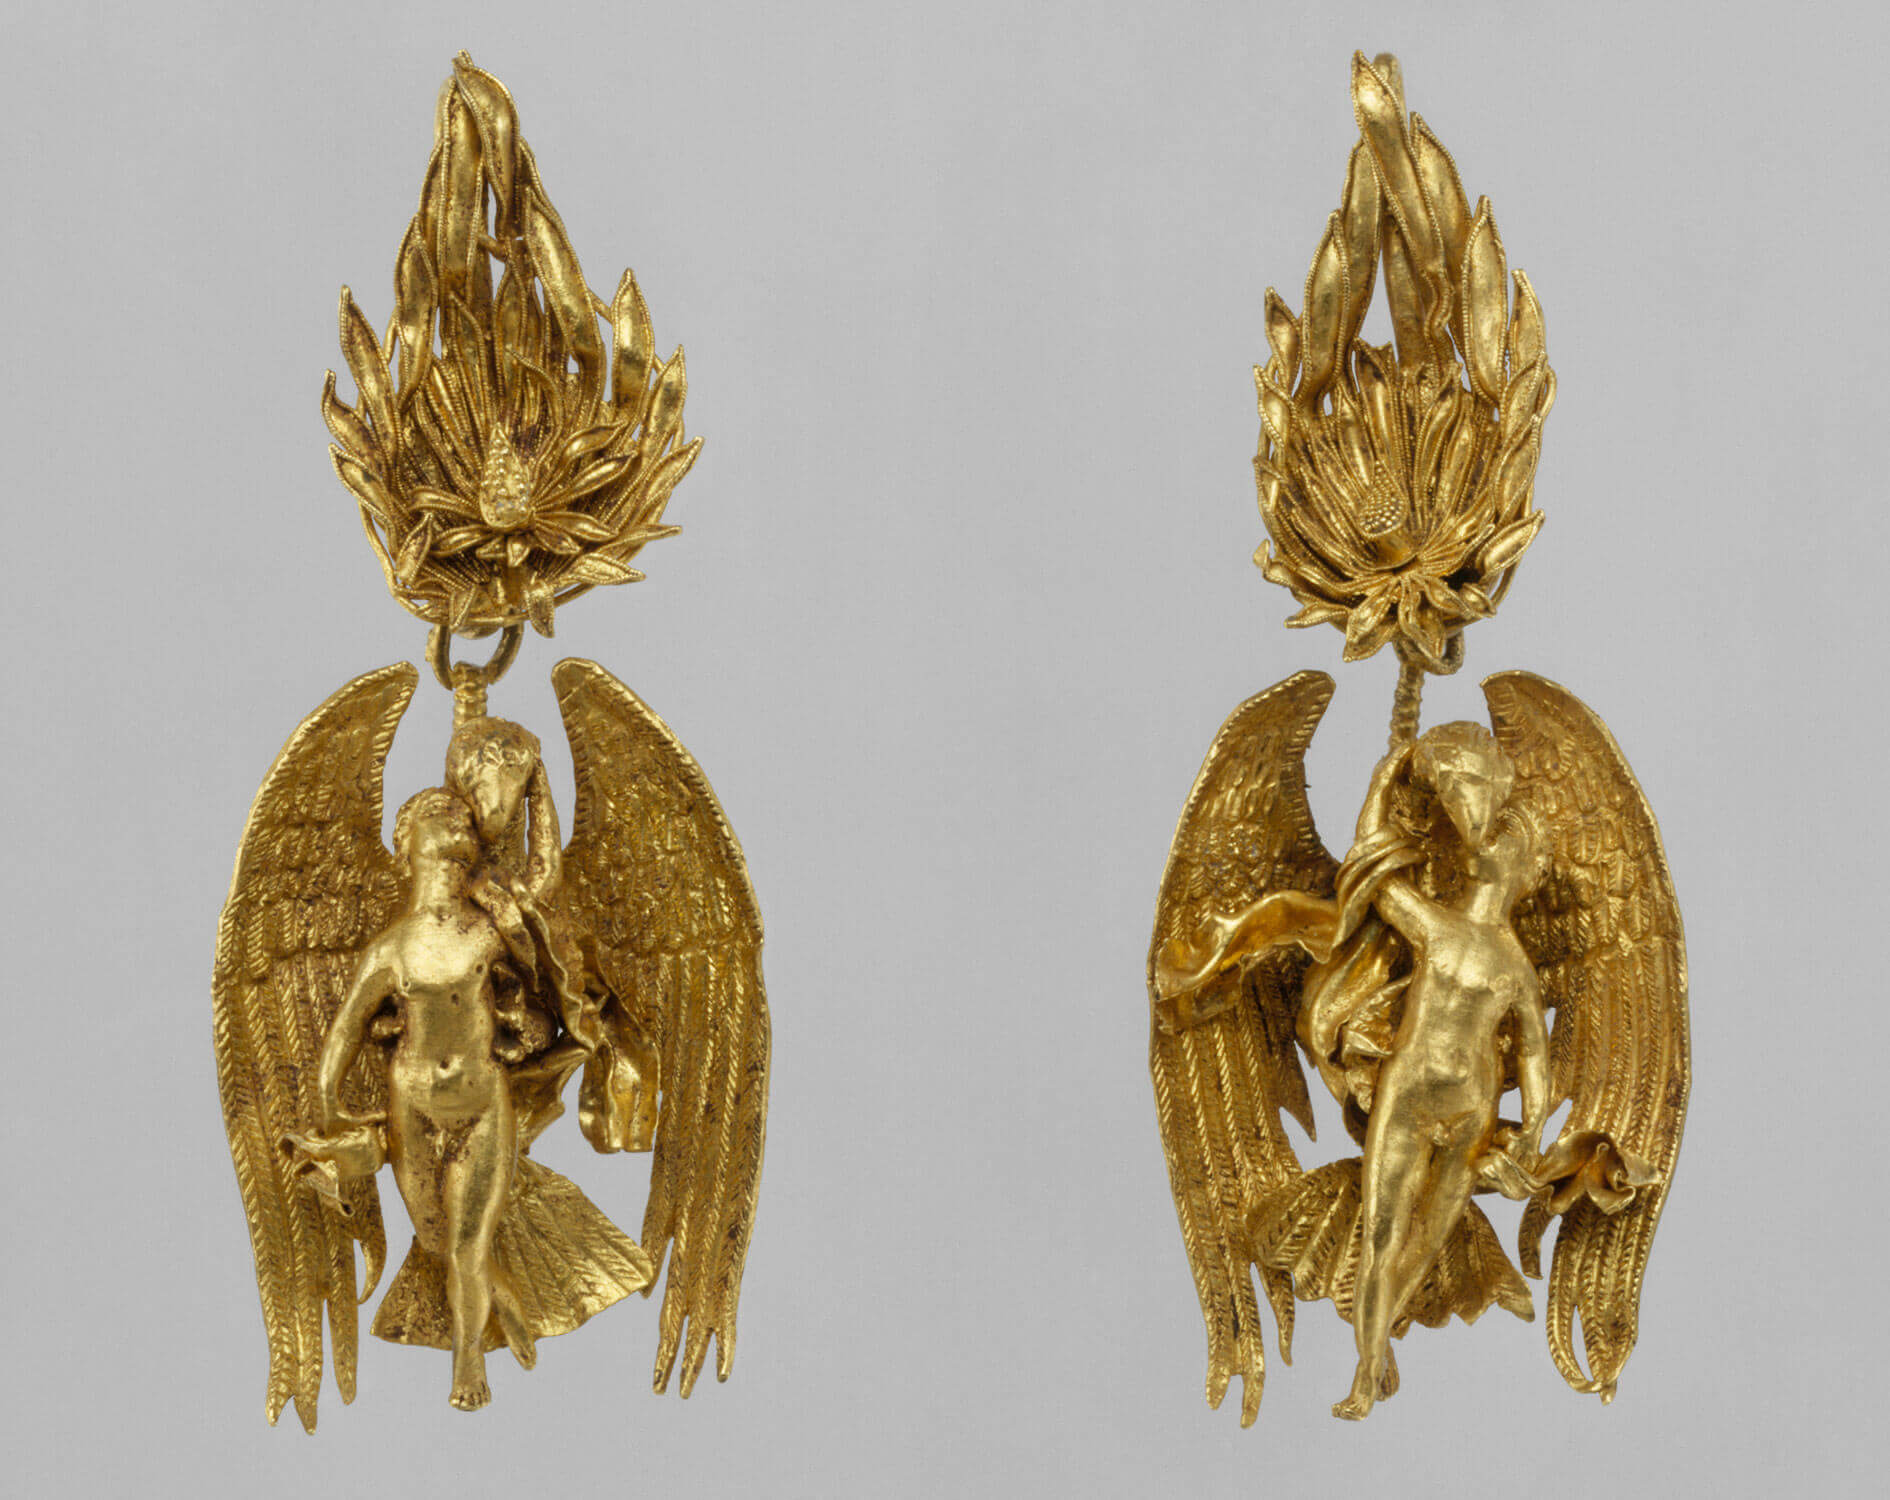 Gold earrings with Trojan prince Ganymede drops, 330-300 BCE.